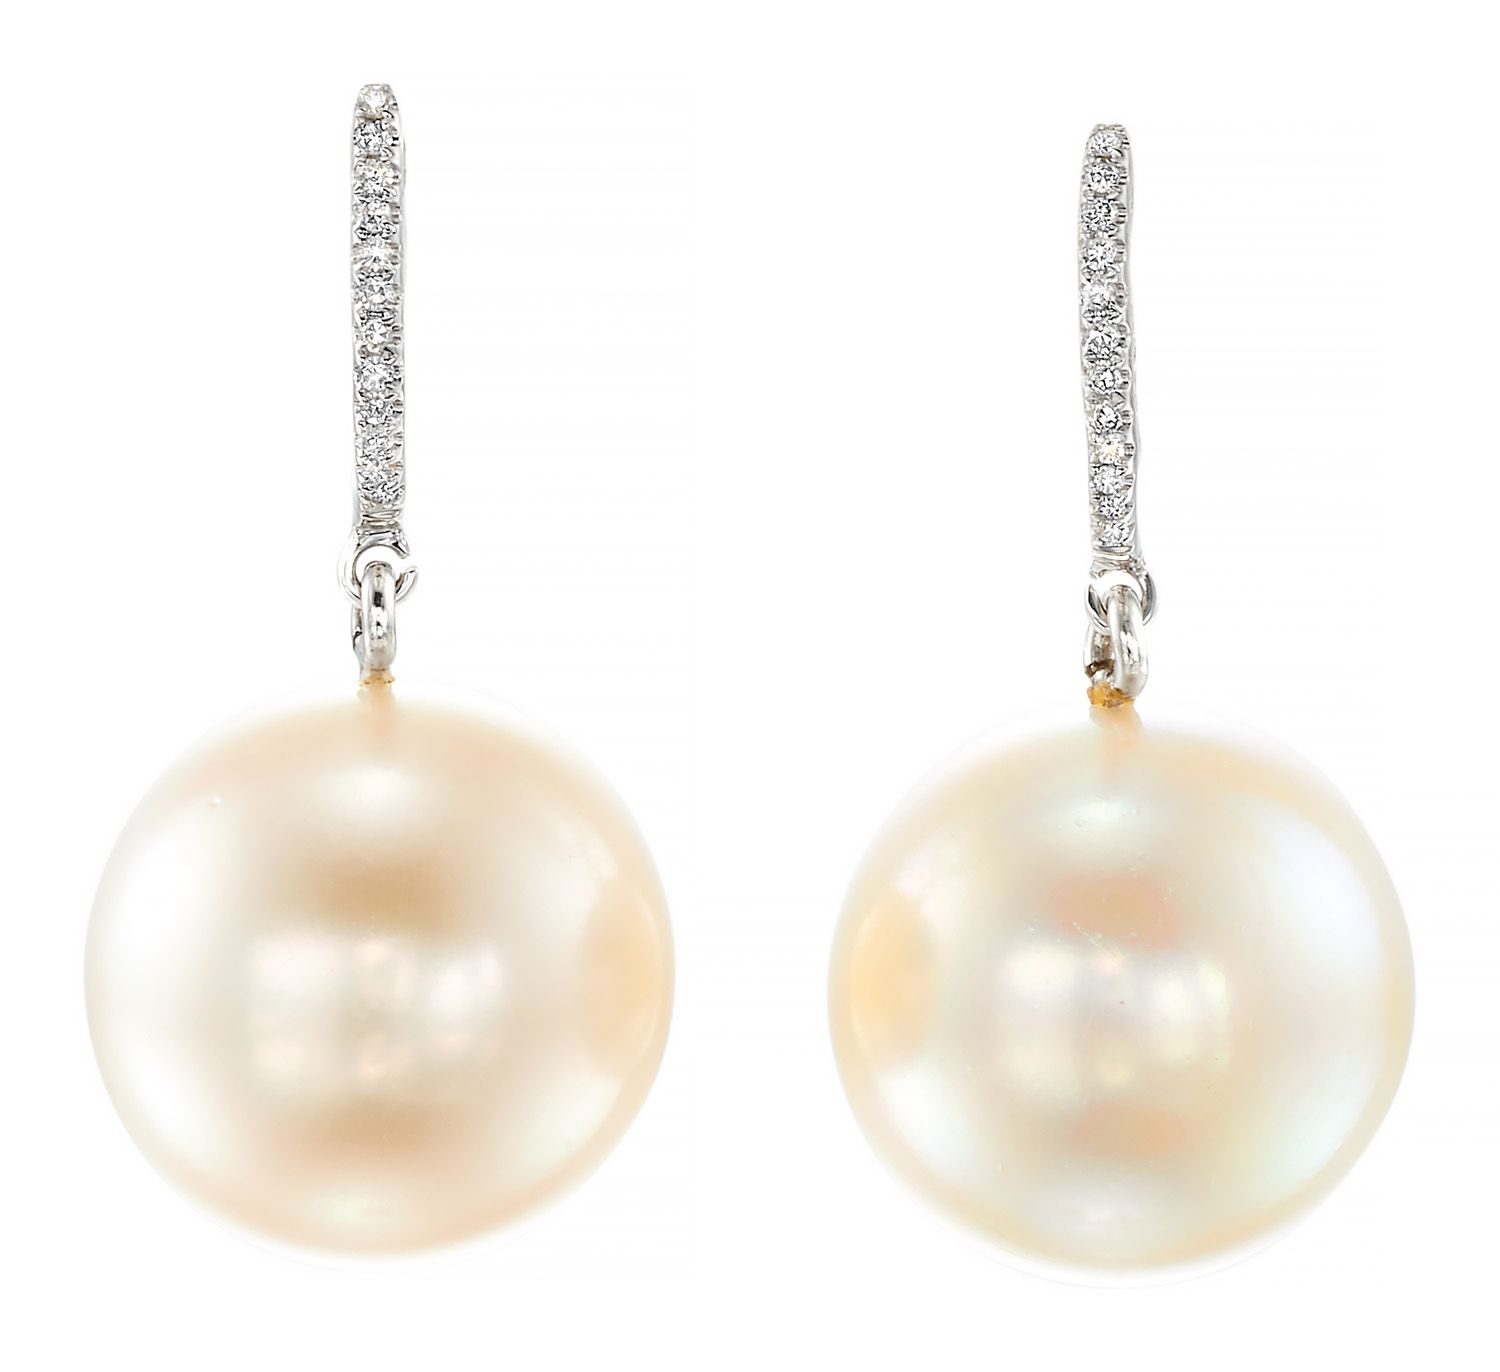 Paire de pendants d'oreilles 白金，每颗都有一颗可能来自南洋的珍珠，并有一排8/8的钻石作为装饰。

直径：15,80至16毫米

&hellip;